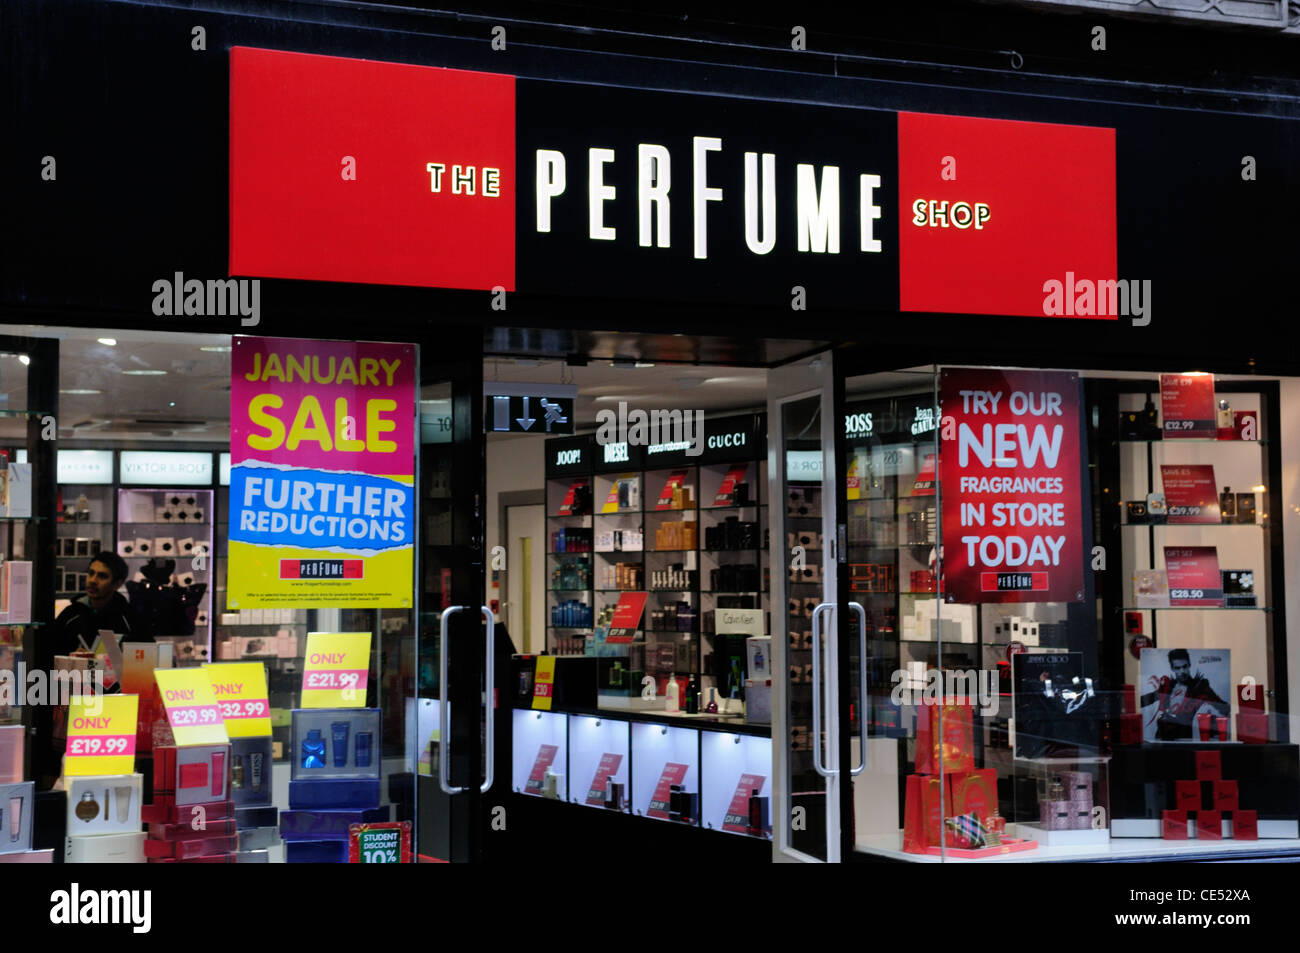 The Perfume Shop, Cambridge, England, UK Stock Photo - Alamy